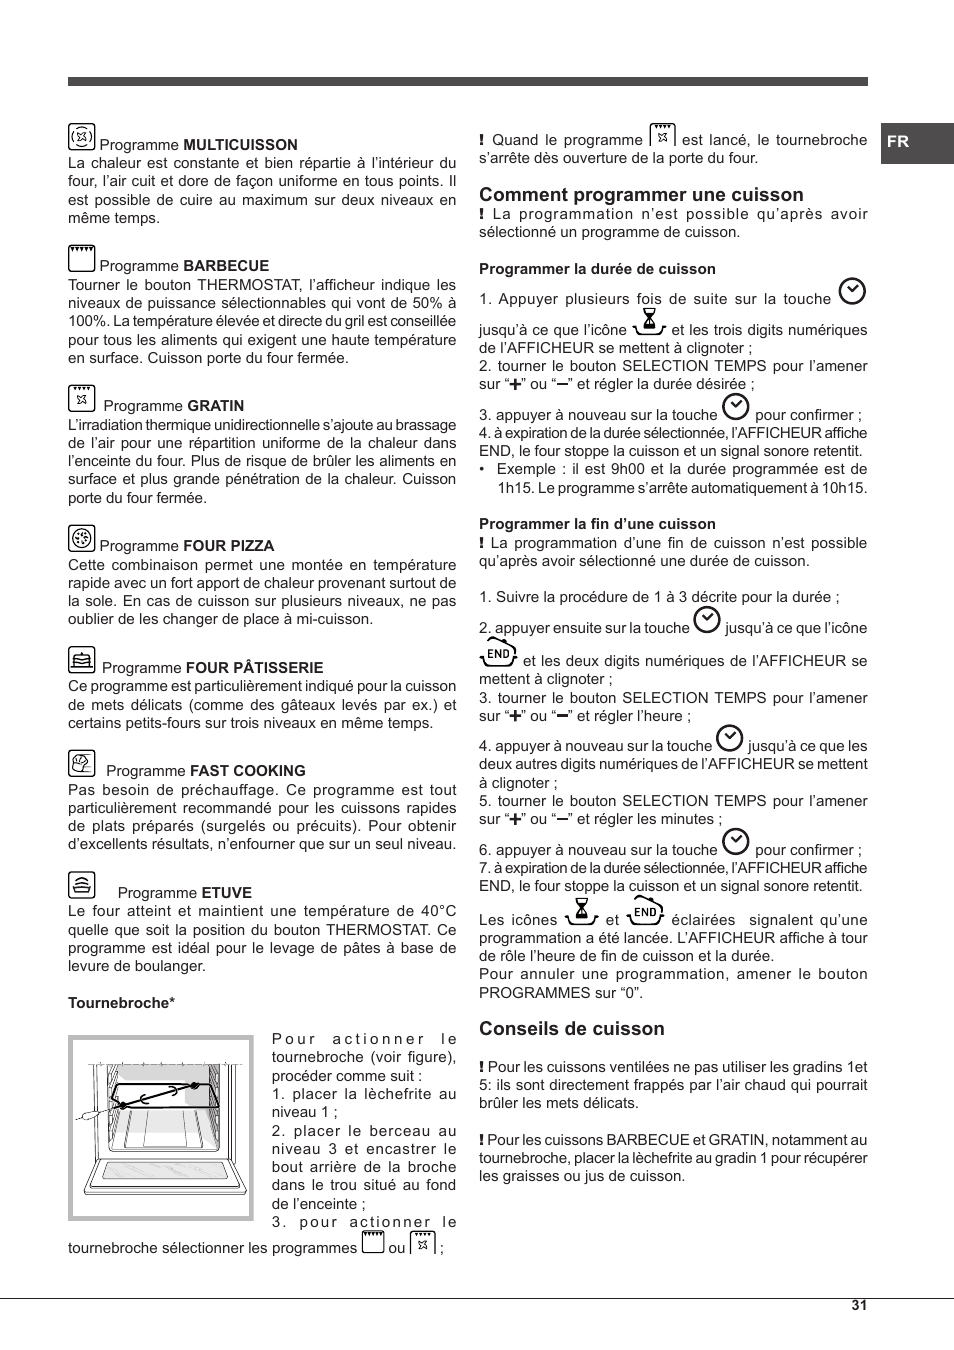 Comment programmer une cuisson, Conseils de cuisson | Hotpoint Ariston  Style FH 89 P IX-HA S User Manual | Page 31 / 56 | Original mode